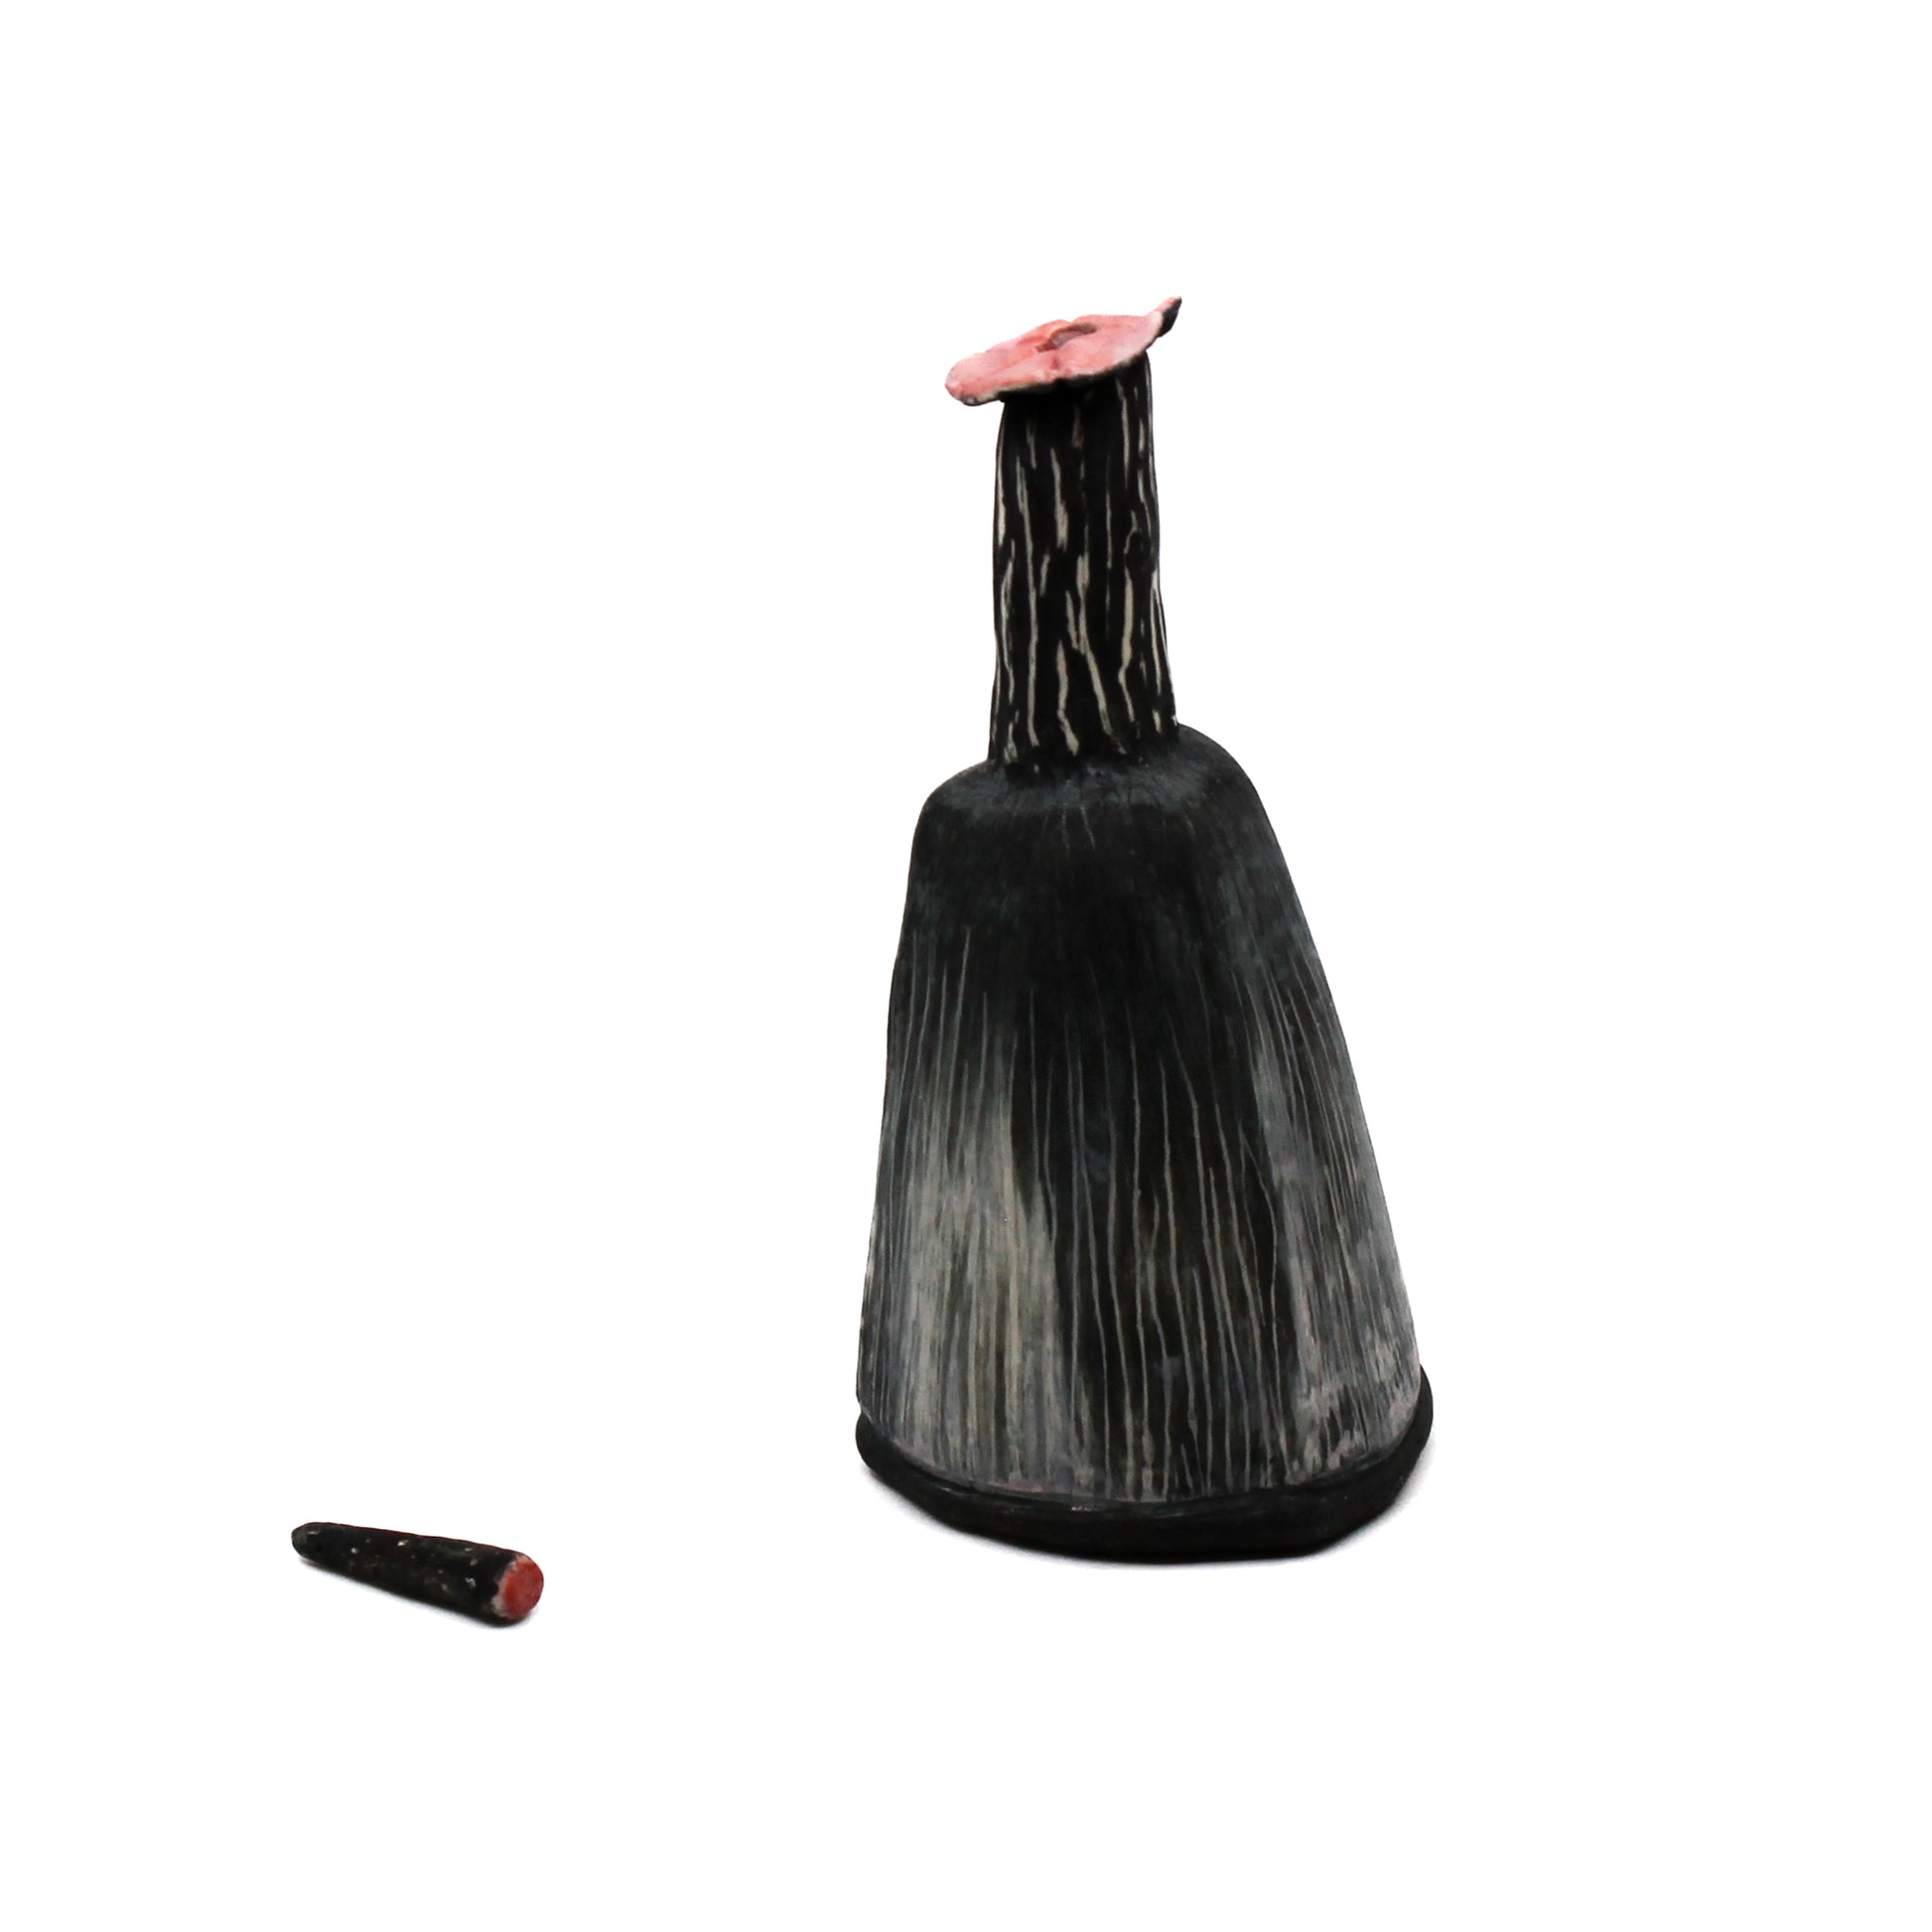 Black pod bottle with stopper